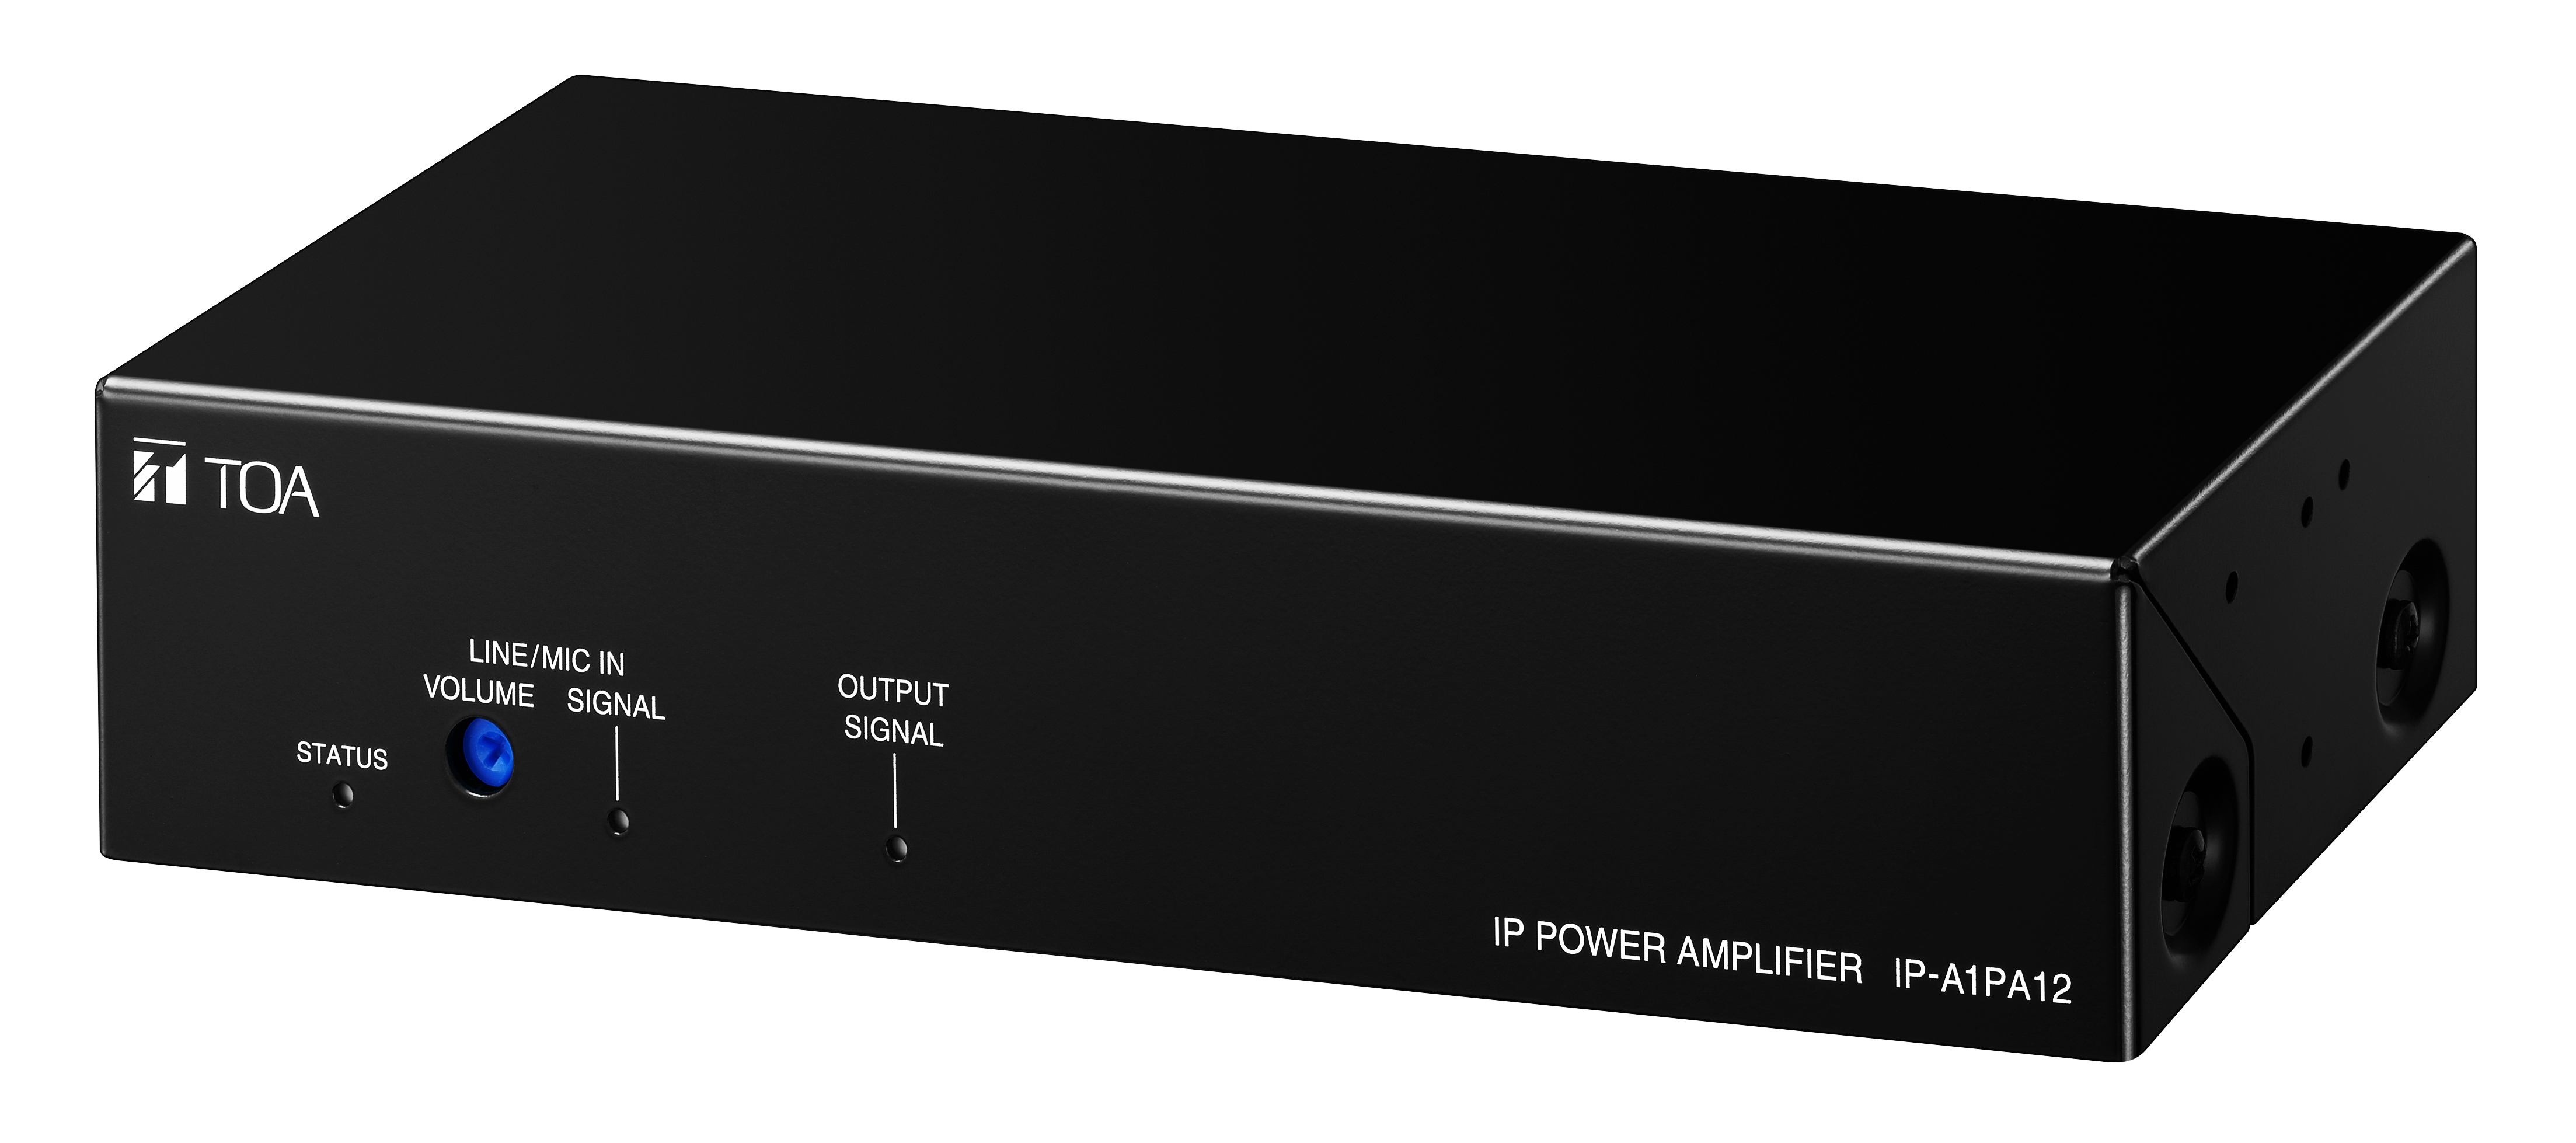 IP-A1PA12 IP Power Amplifier